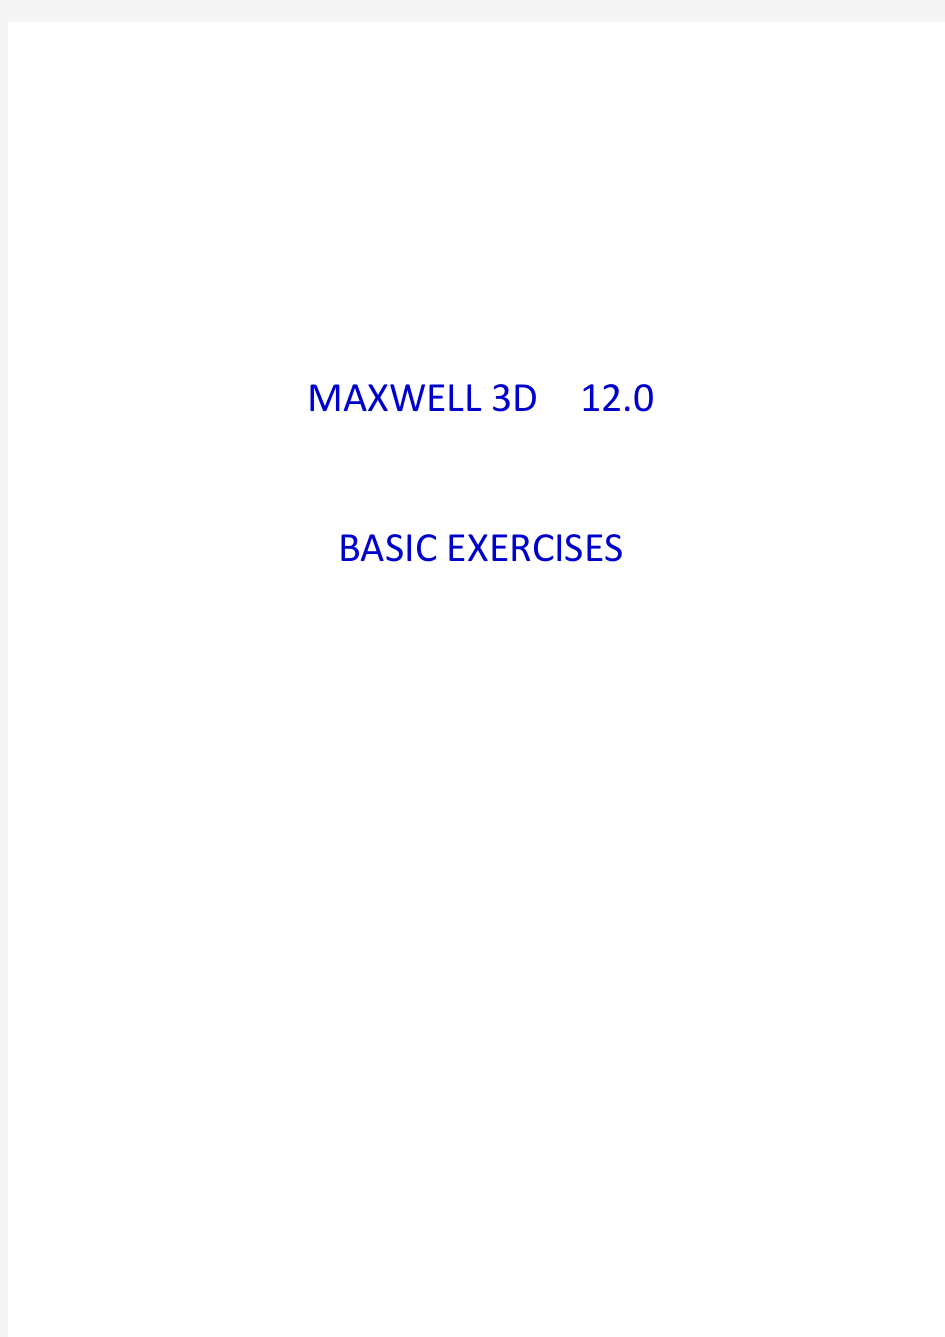 Maxwell仿真实例